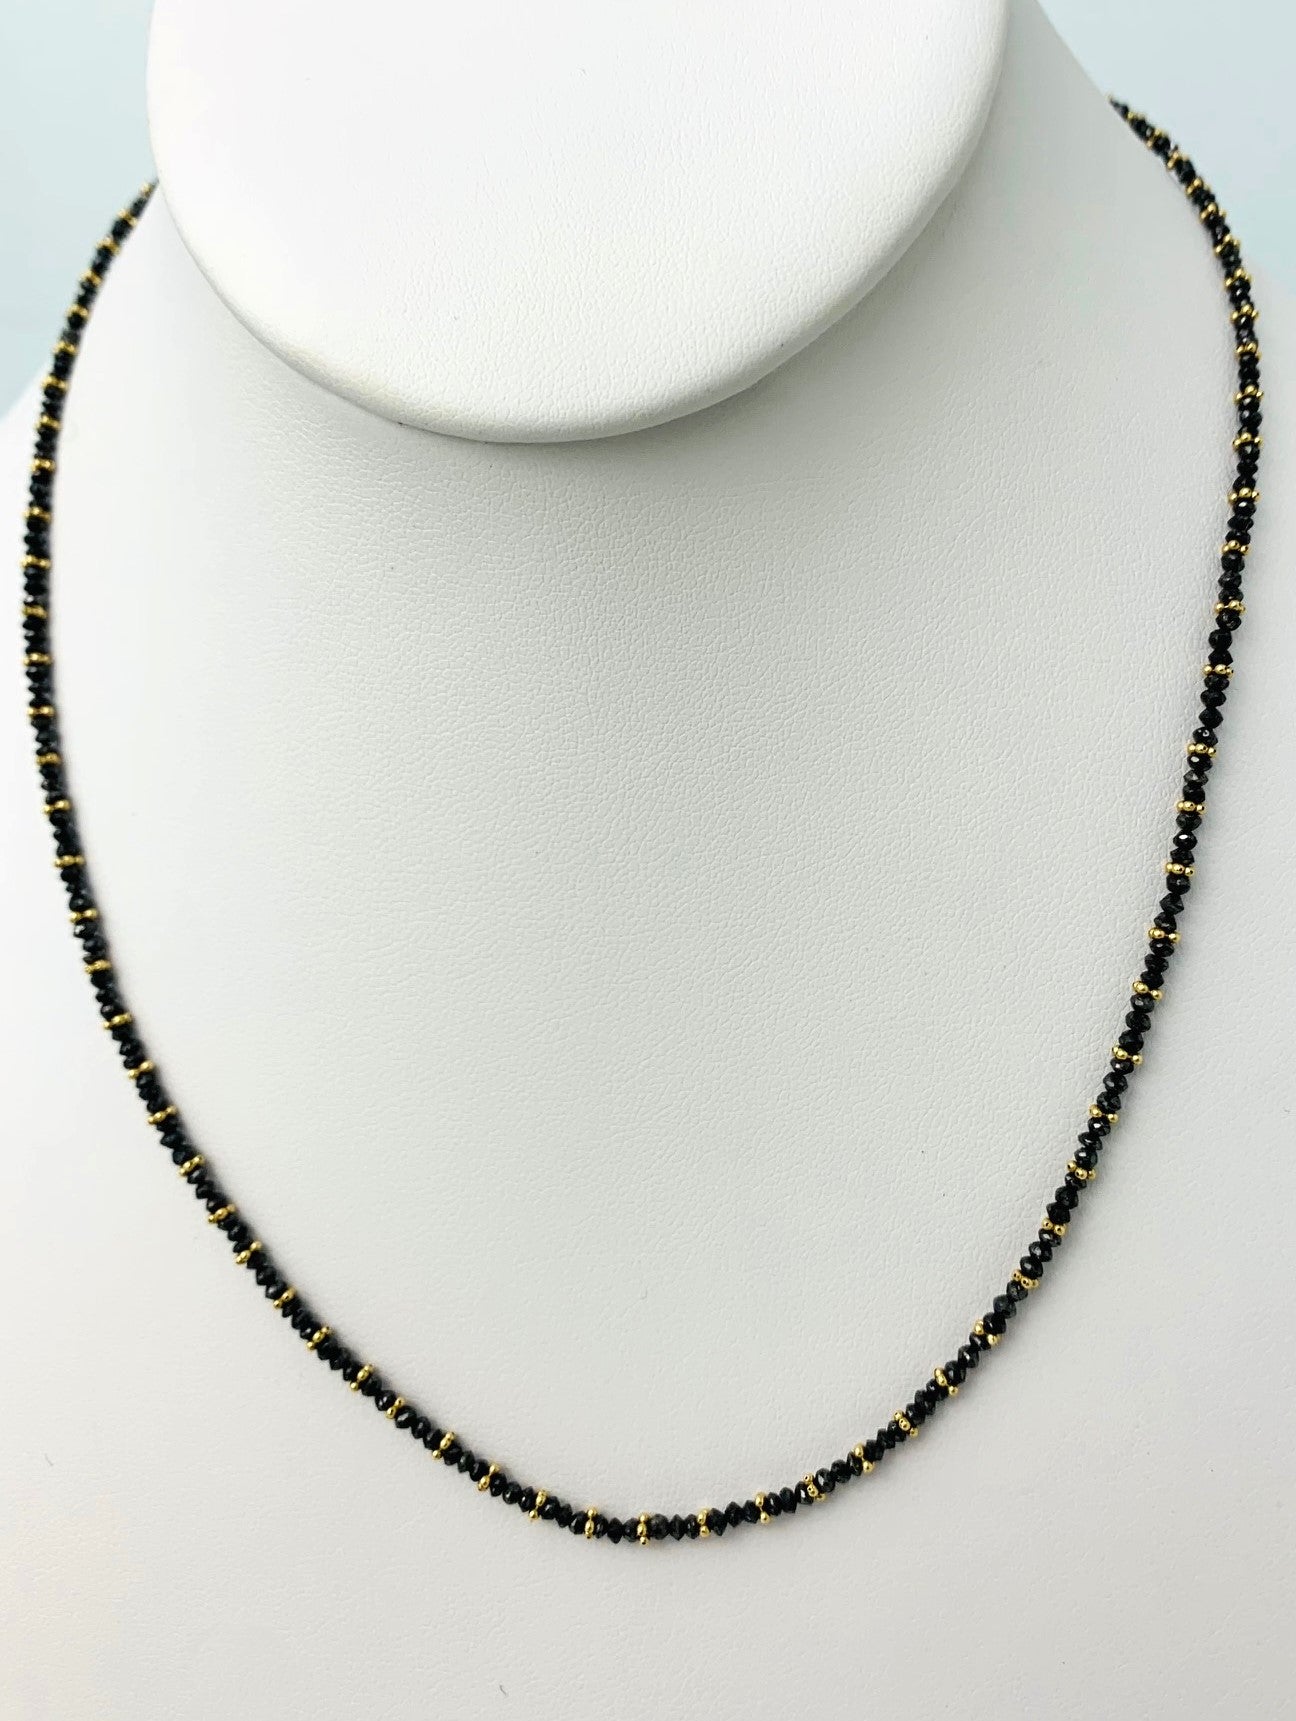 17" Black Diamond Necklace in 14KY - NCK-245-CRDDIA14Y-BK-17 19.11ctw